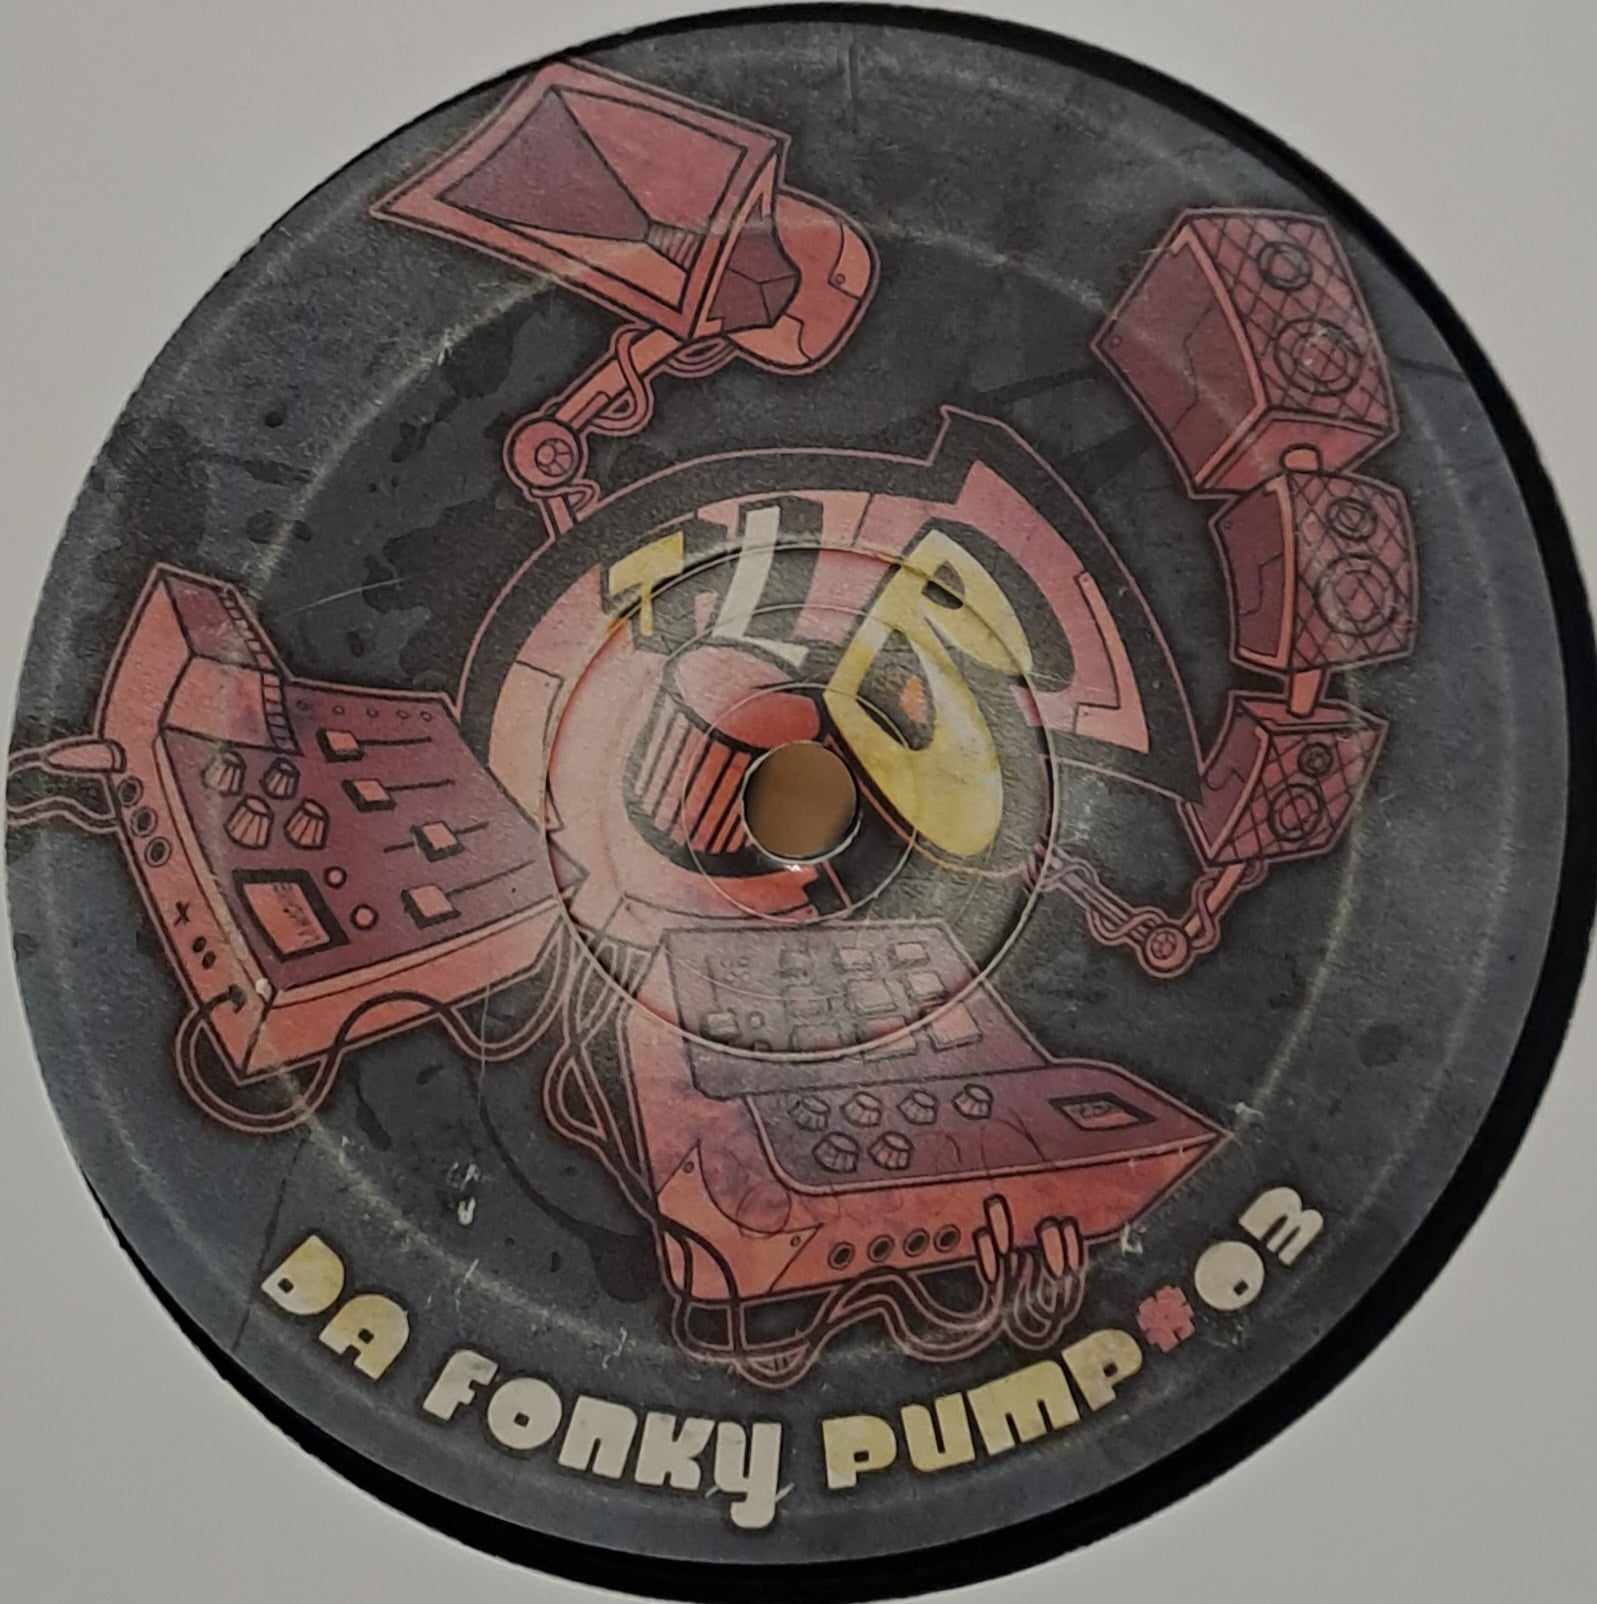 Da Fonky Pump 03 - vinyle tribecore